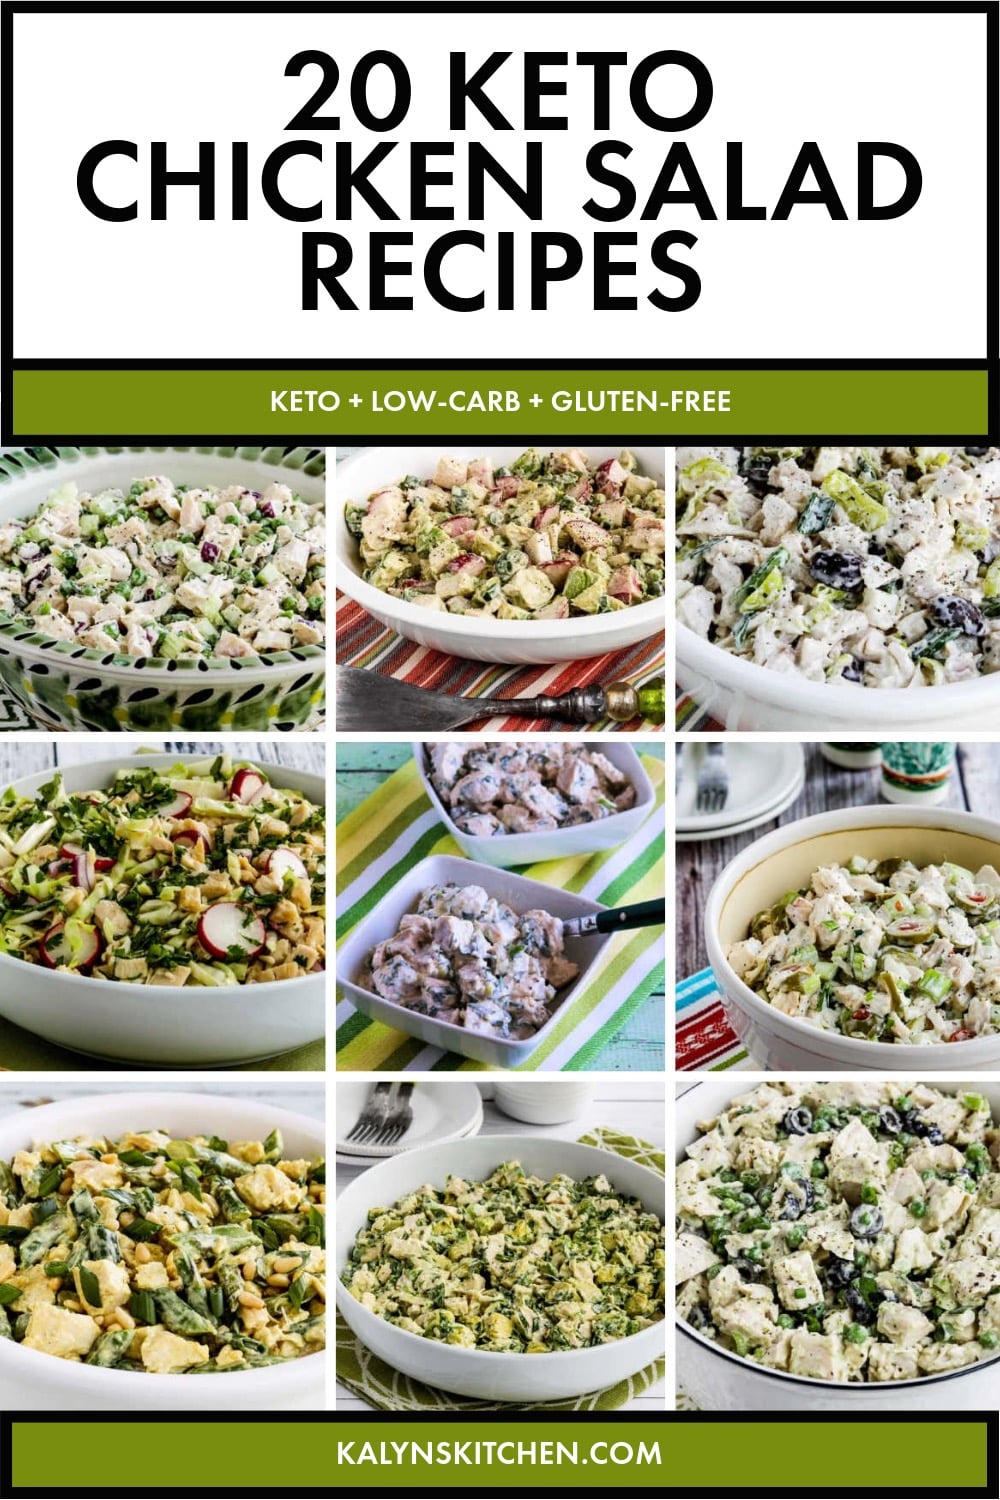 Pinterest image of 20 Keto Chicken Salad Recipes